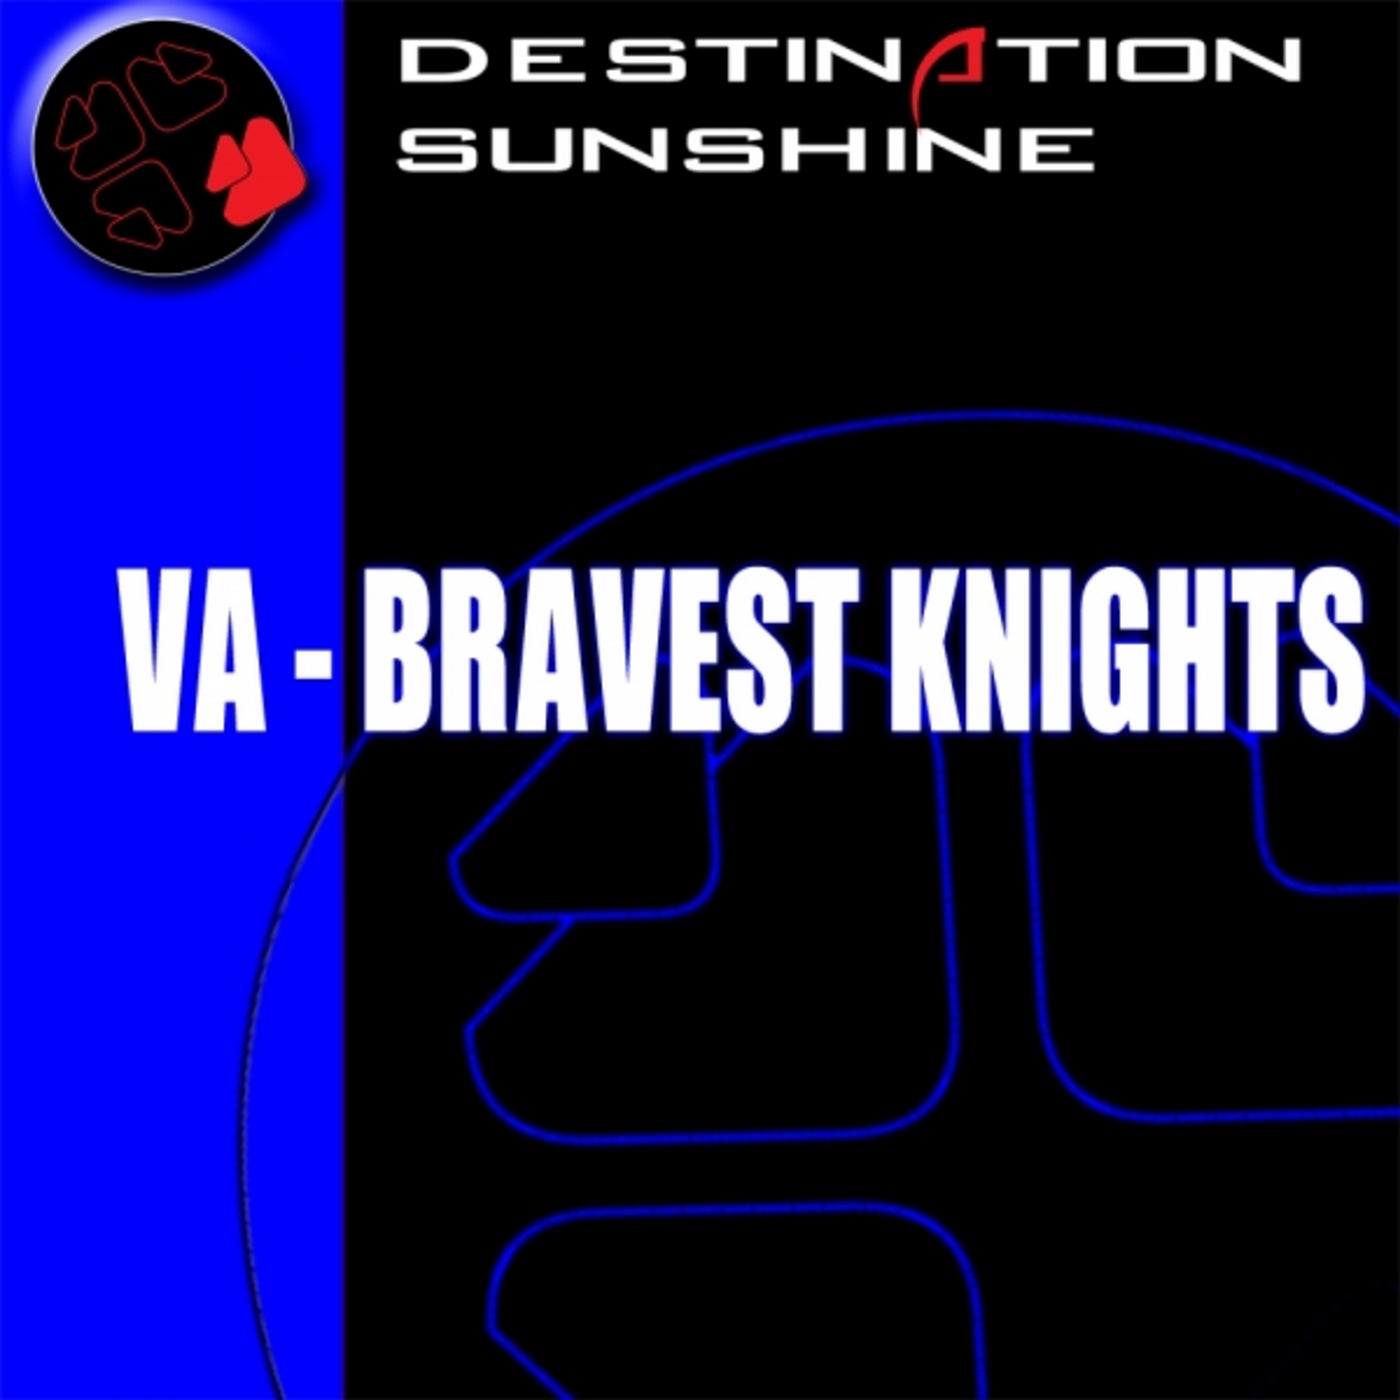 Bravest Knights